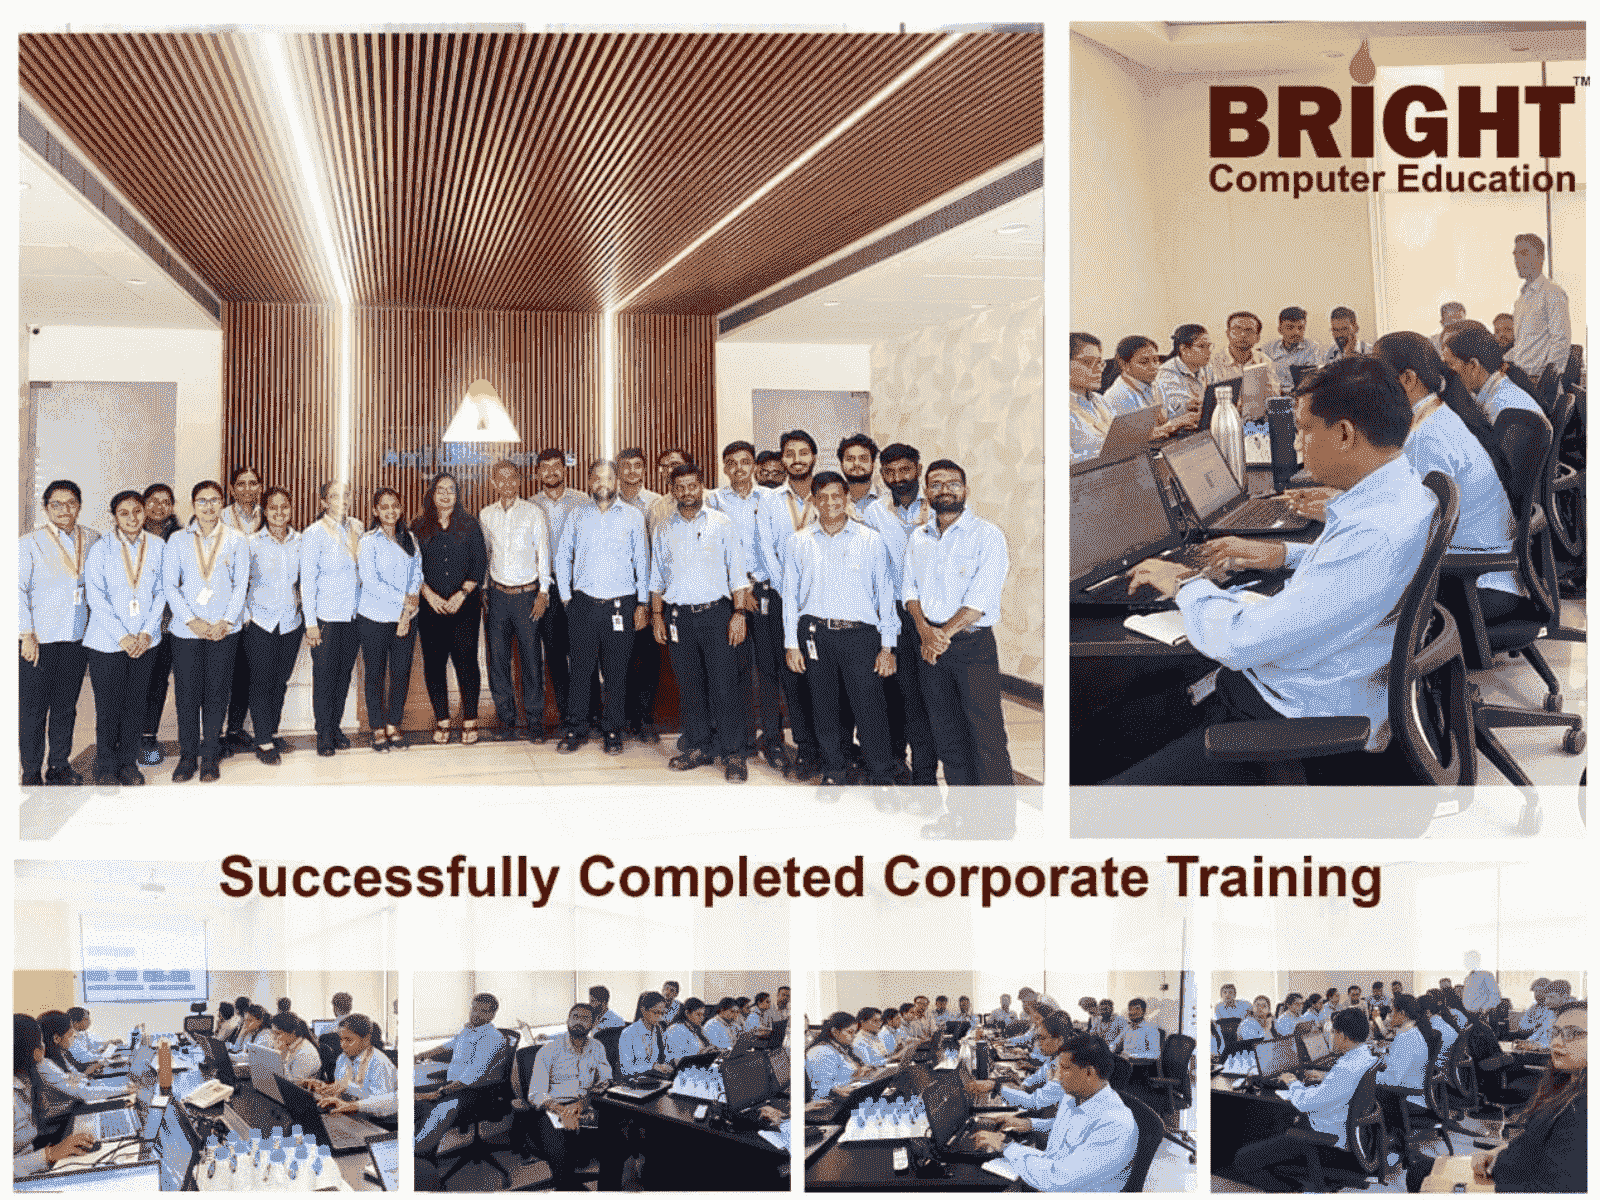 Corporate Training image